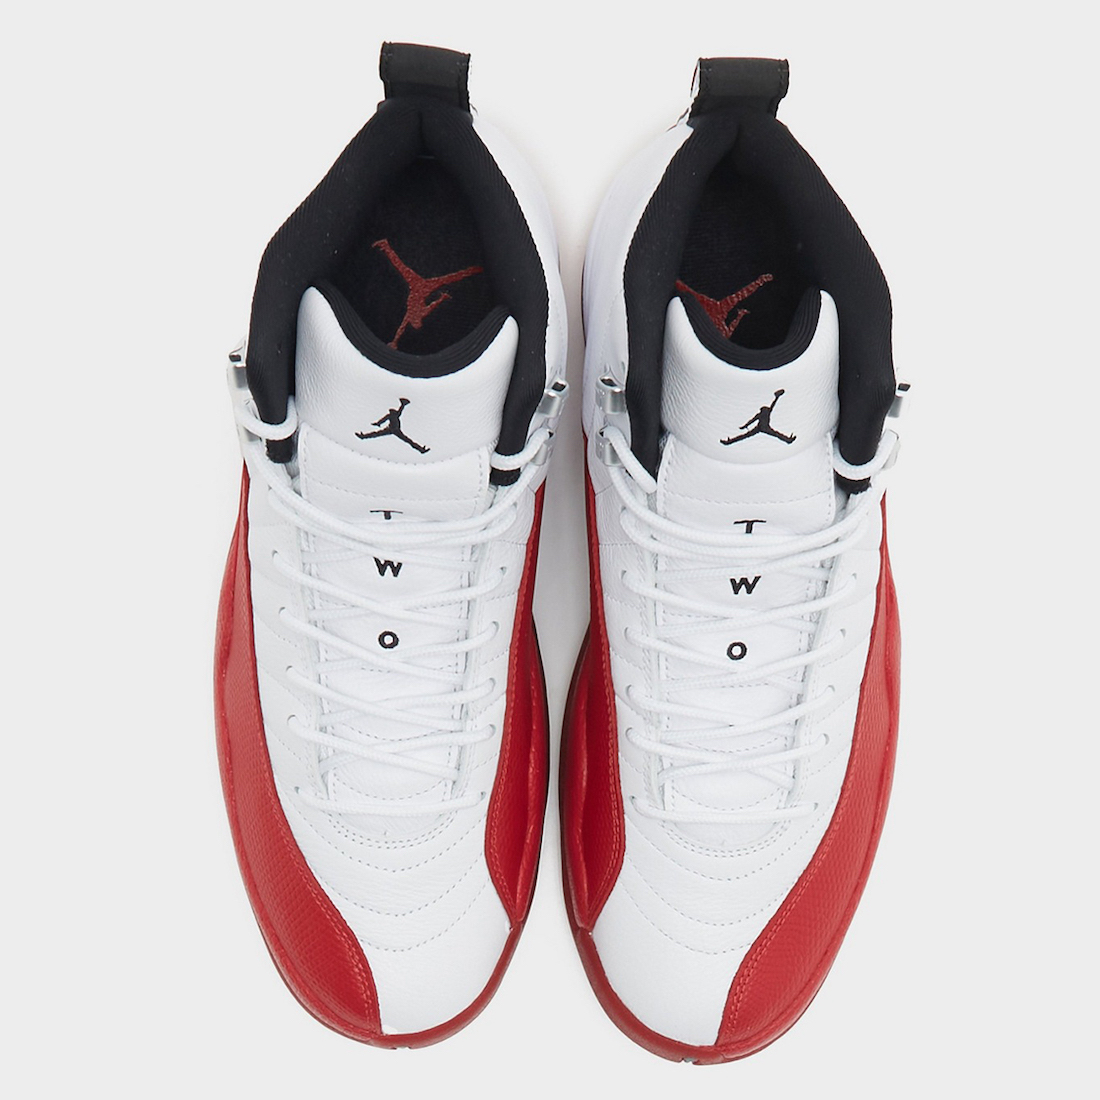 The Air Jordan 12 “Cherry”